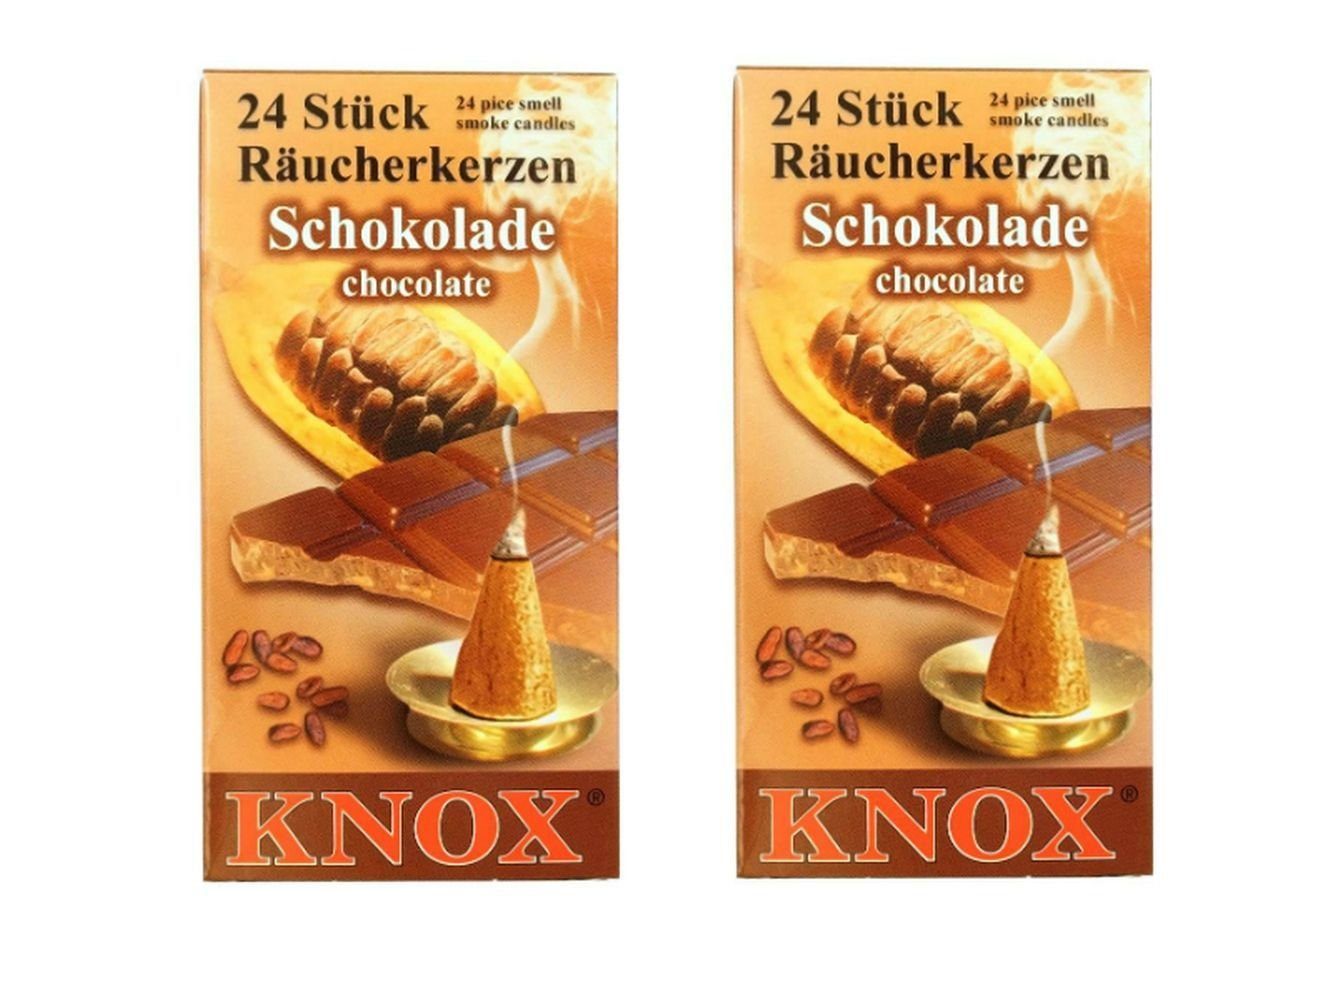 Päckchen Packung Räuchermännchen Schokolade 2 - KNOX 24er Räucherkerzen-